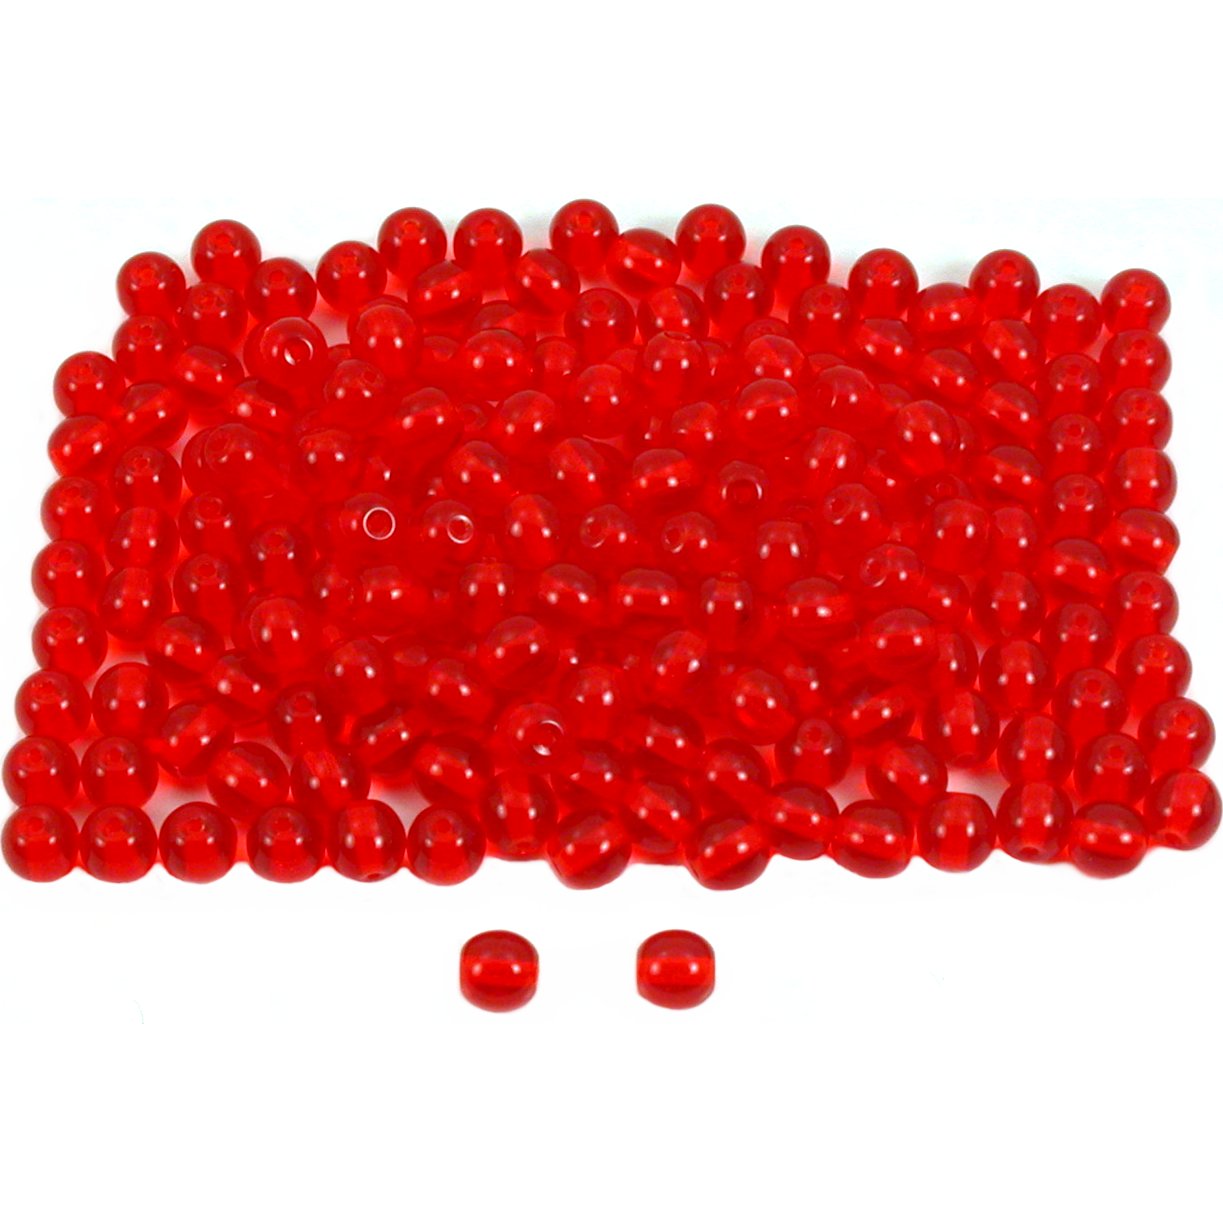 200 Red Round Druk Czech Glass Beads Jewelry Parts 6mm